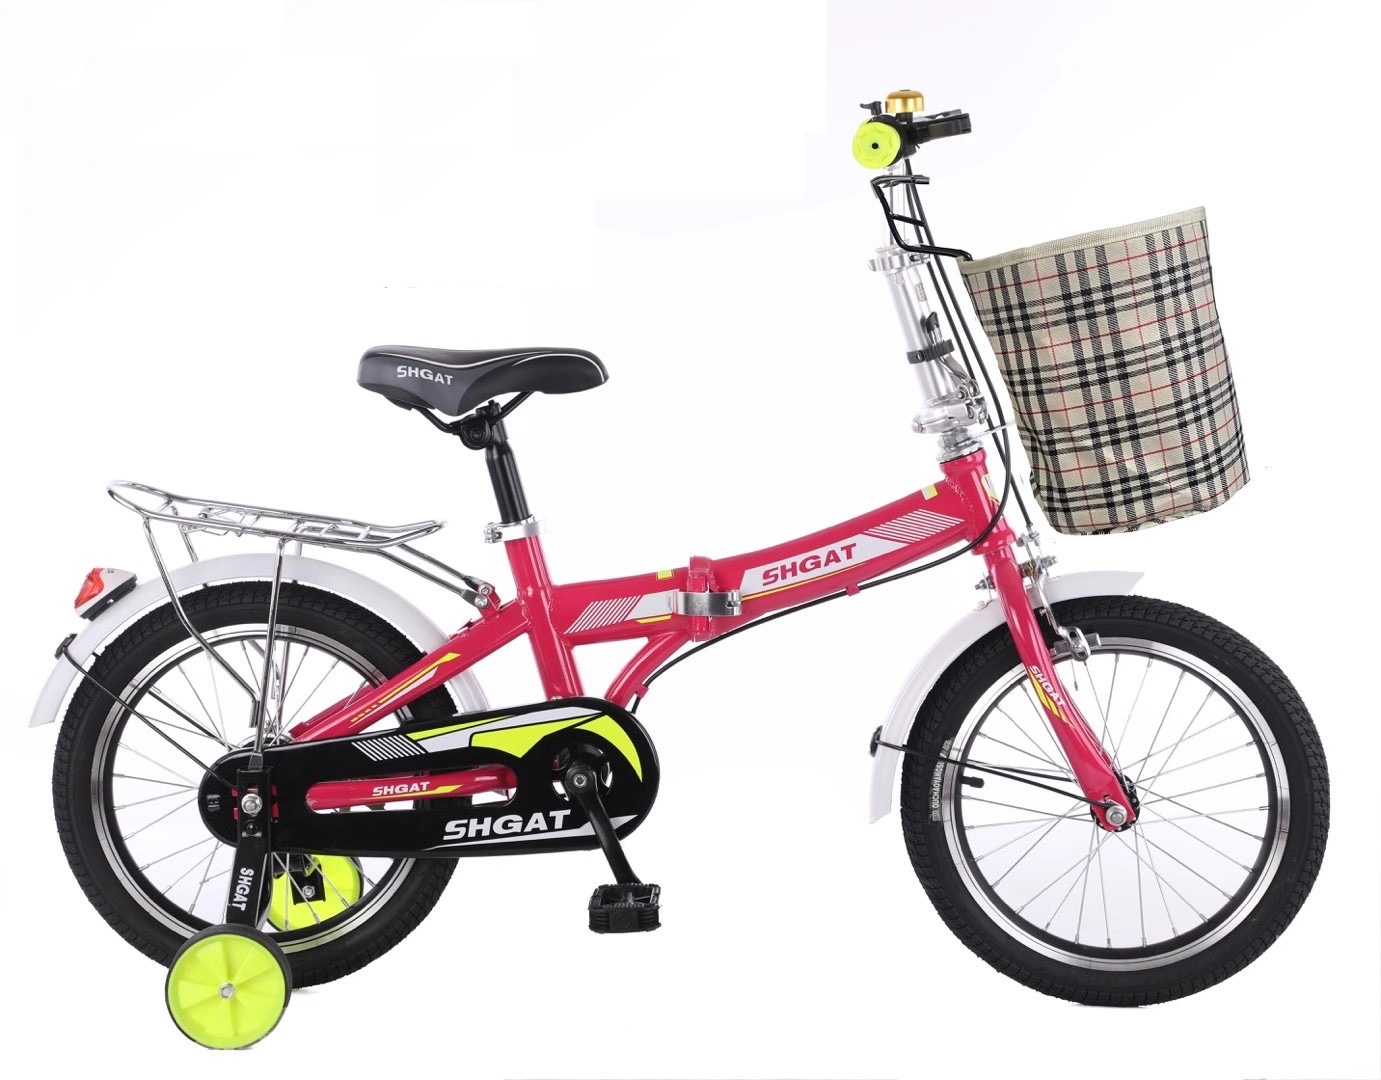 Low price for Second Hand Folding Bike - China Manufacturer of Wholesale Mini Bike City Foldable Bike – Beimudou